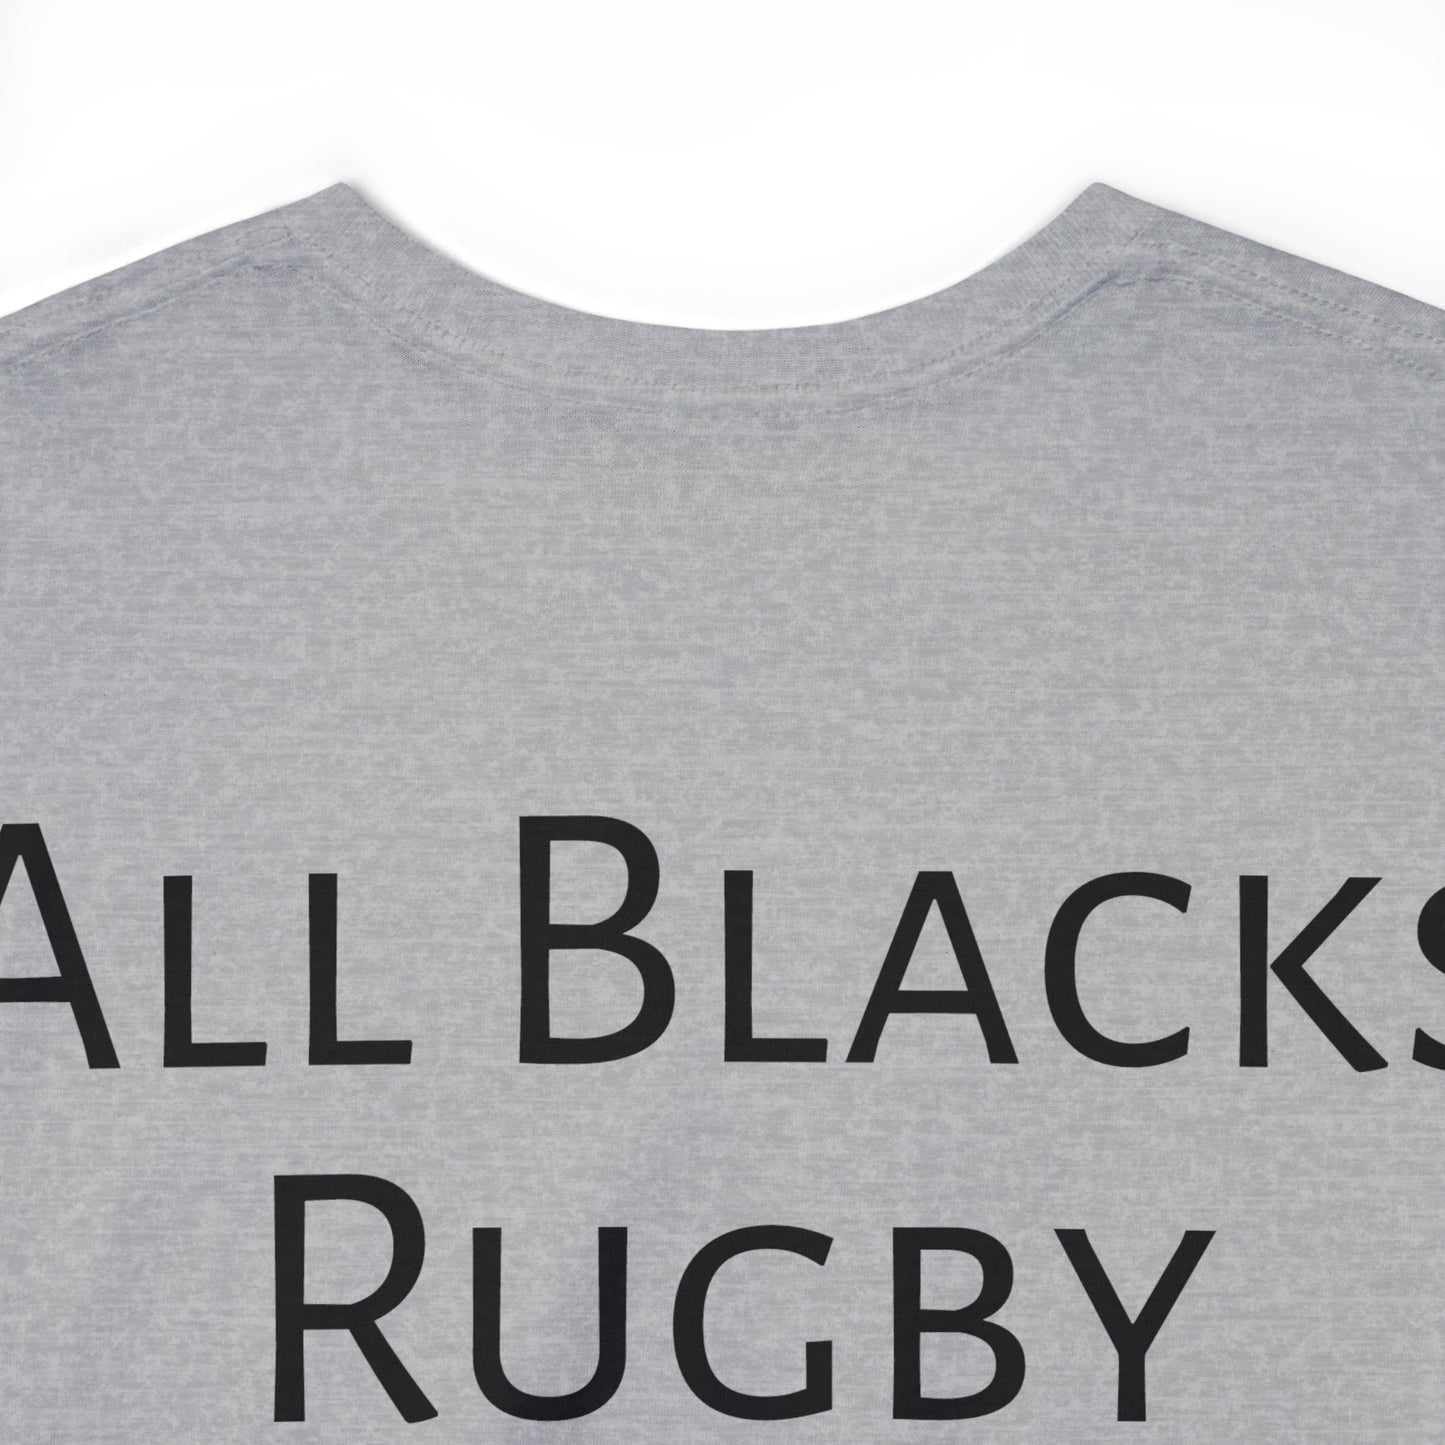 All Blacks with Web Ellis Cup - light shirts